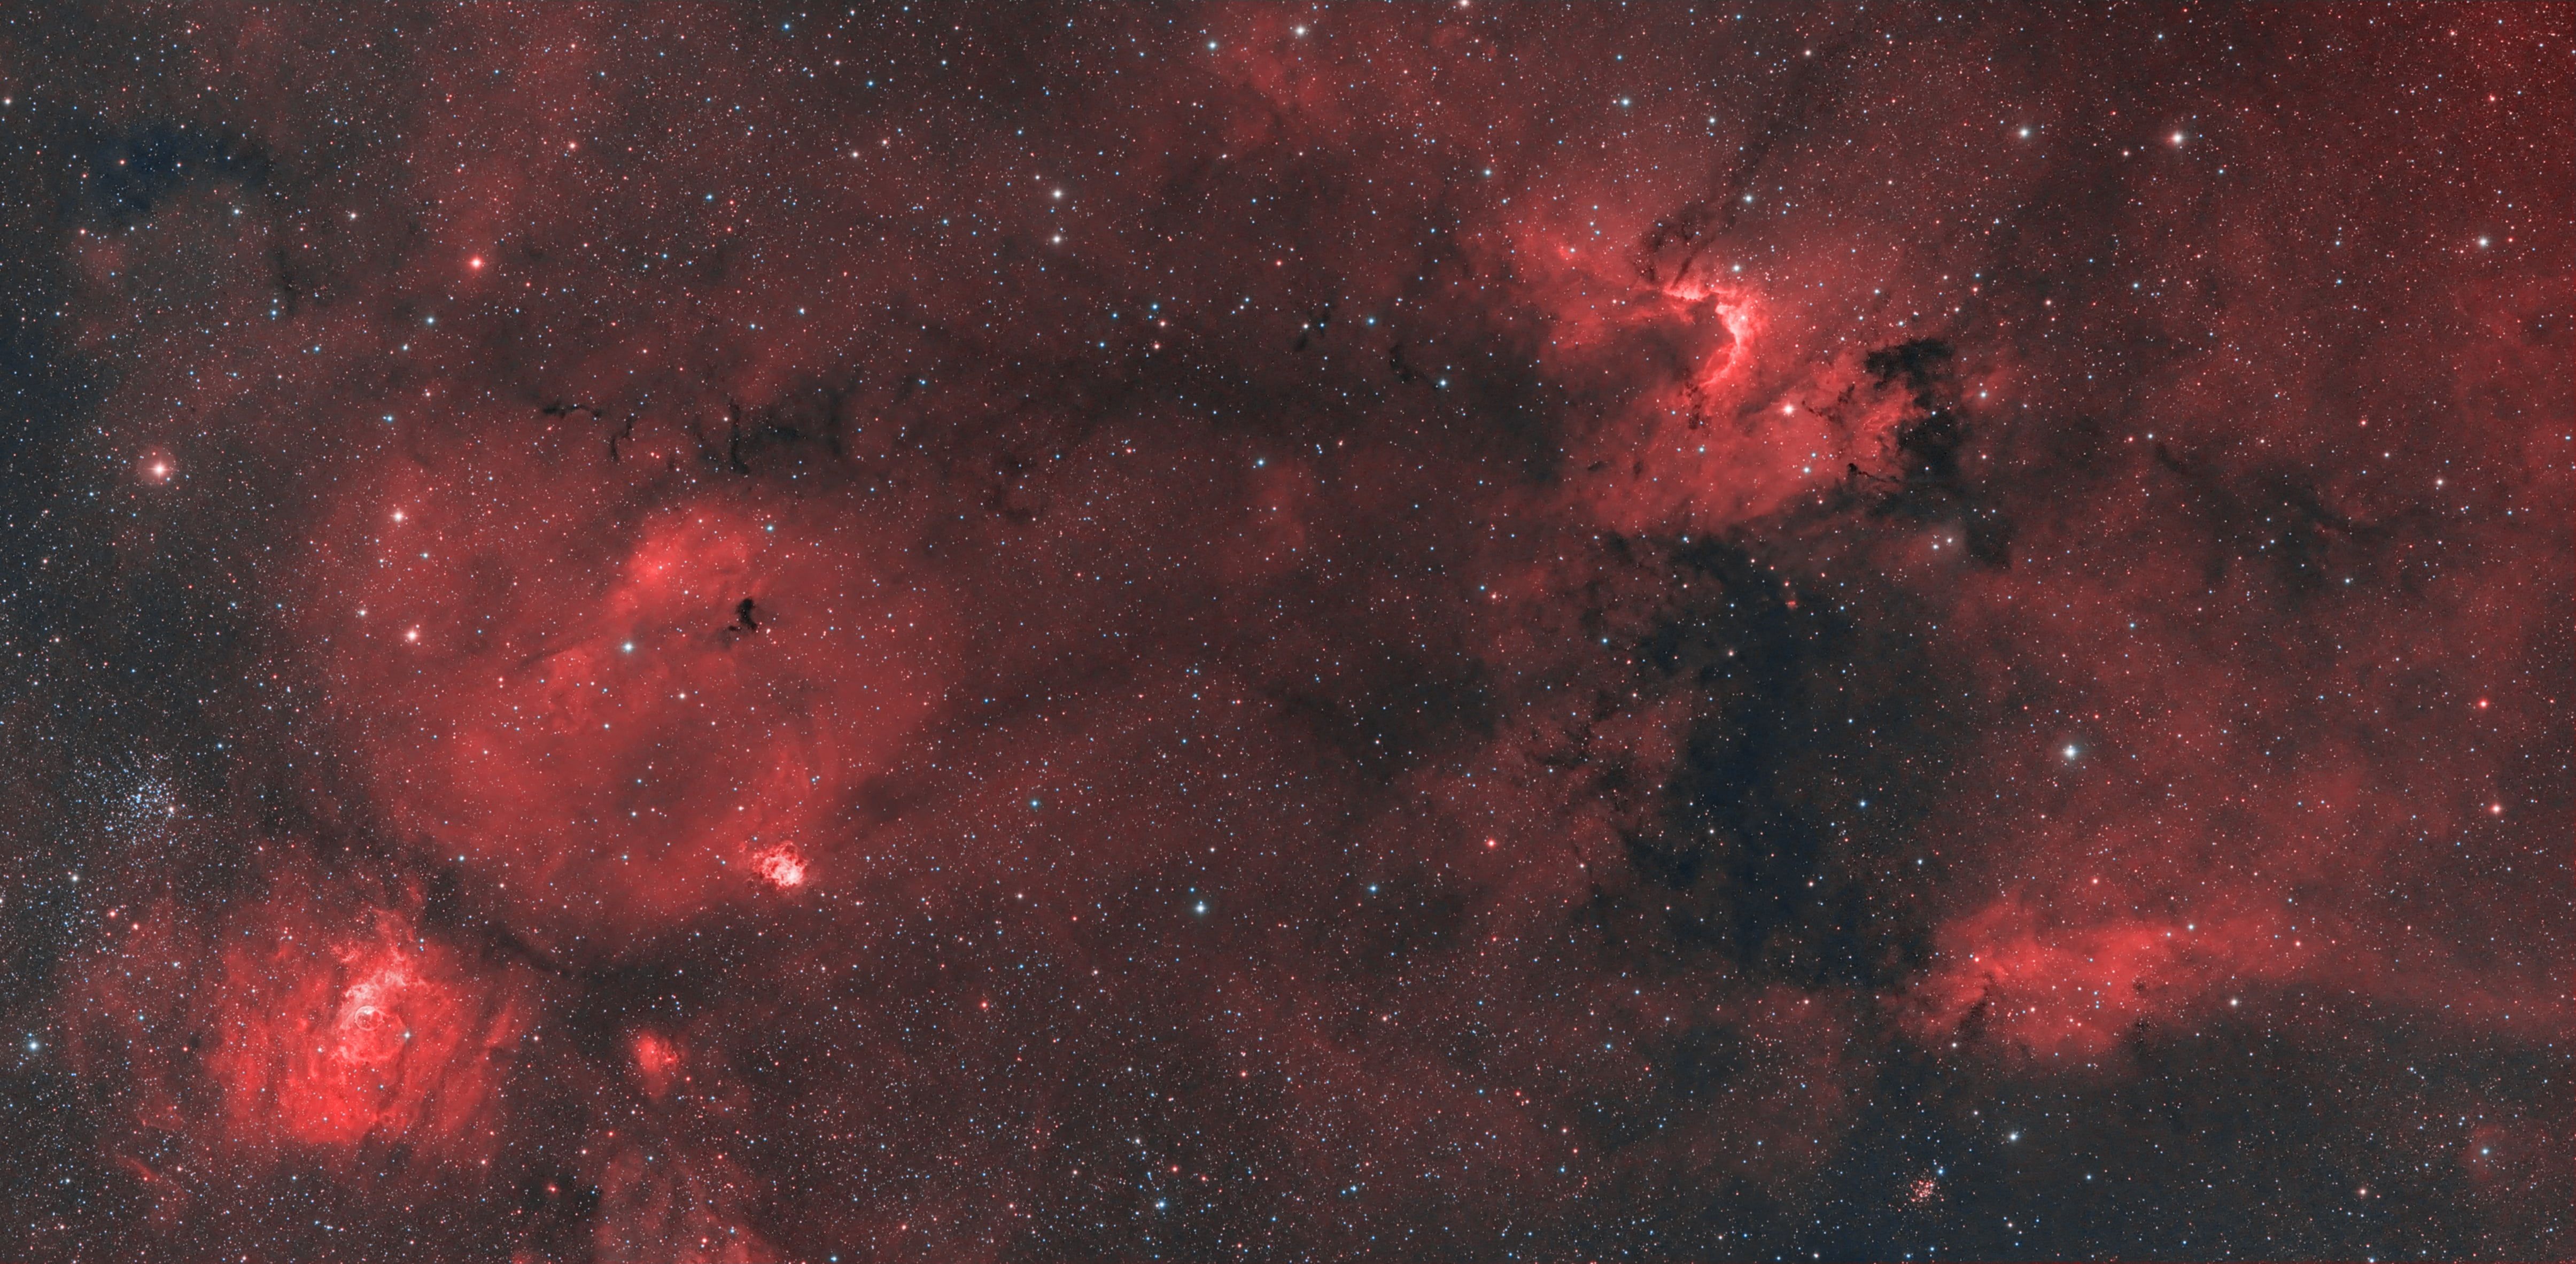 Bubble Nebula HD wallpaper free download